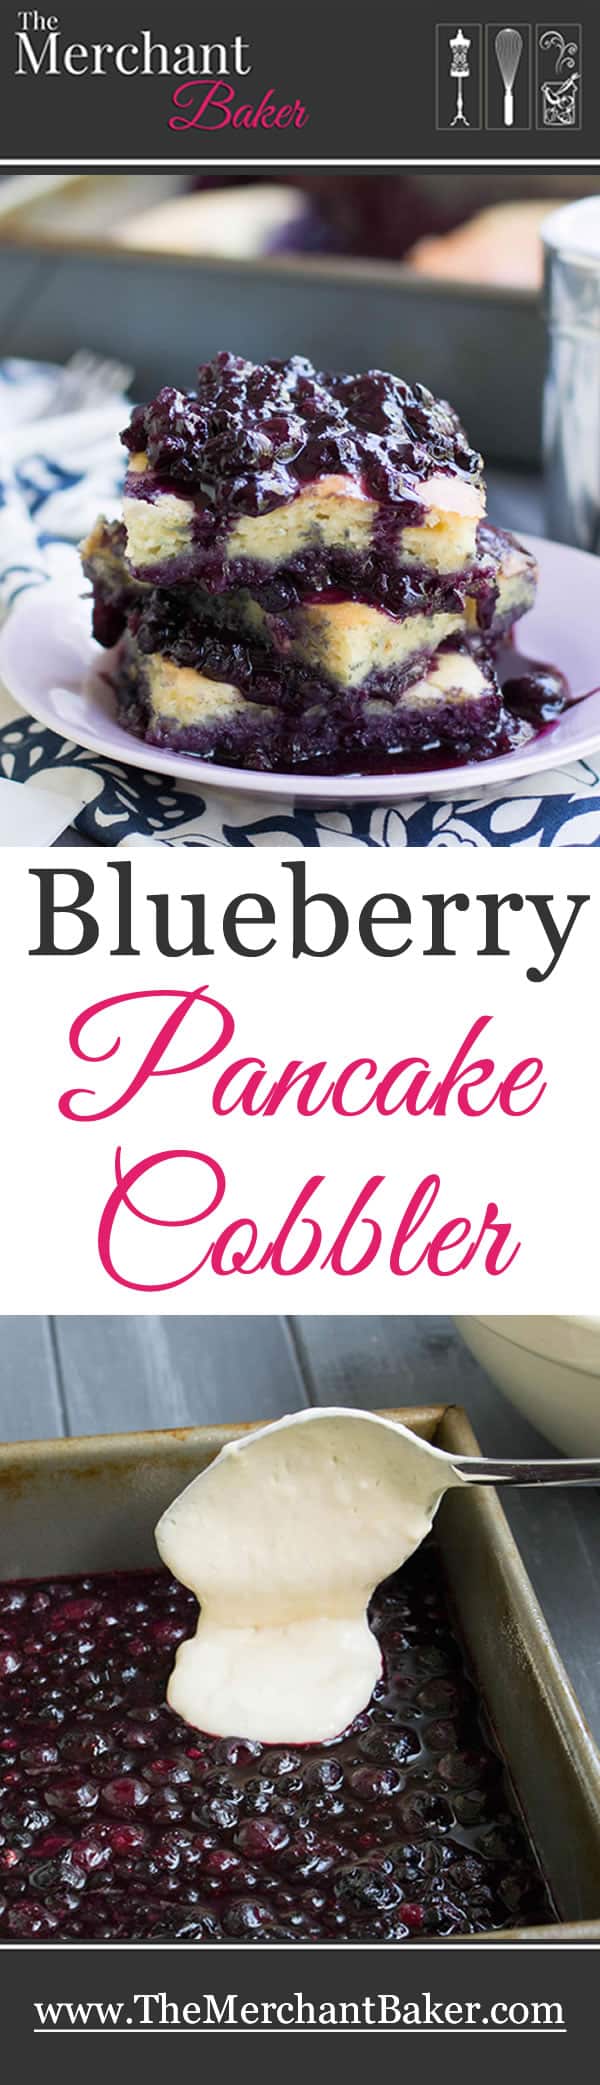 Blueberry Pancake Cobbler